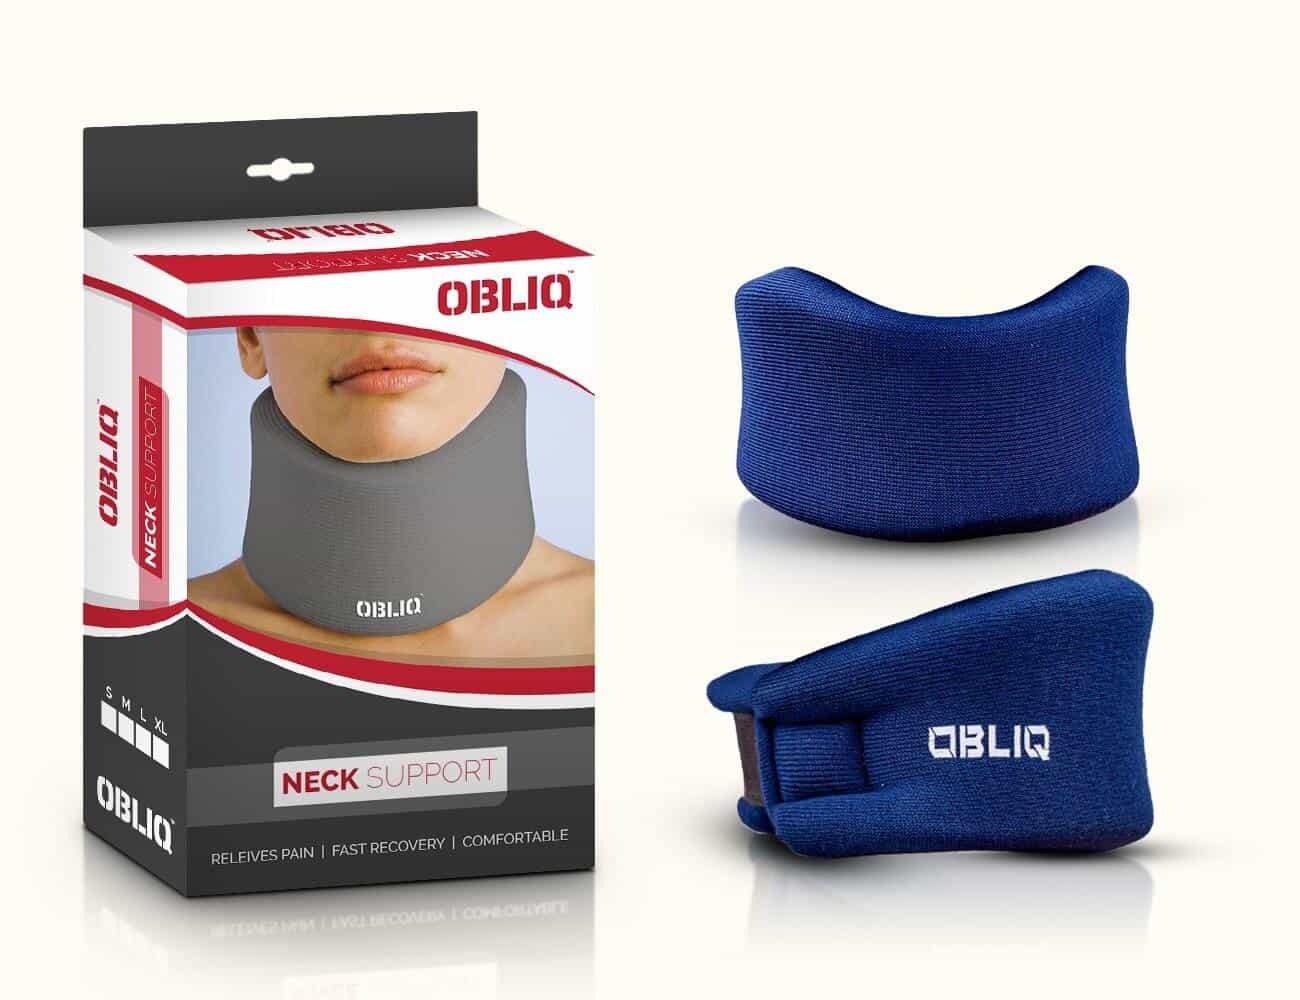 OBLIQ Soft Cervical Collar Review